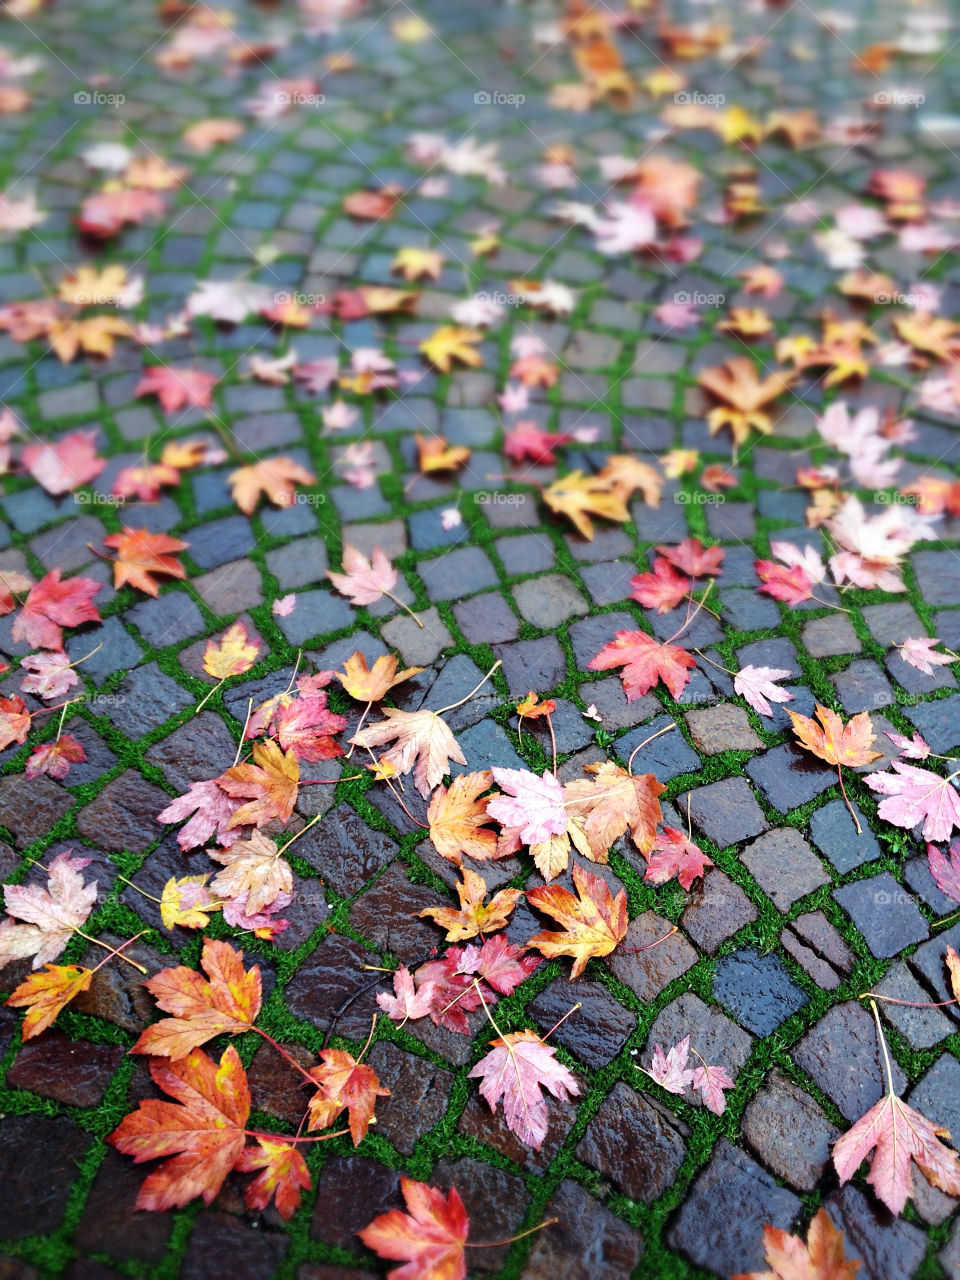 Wet autumn leaves on cobblestone pavement